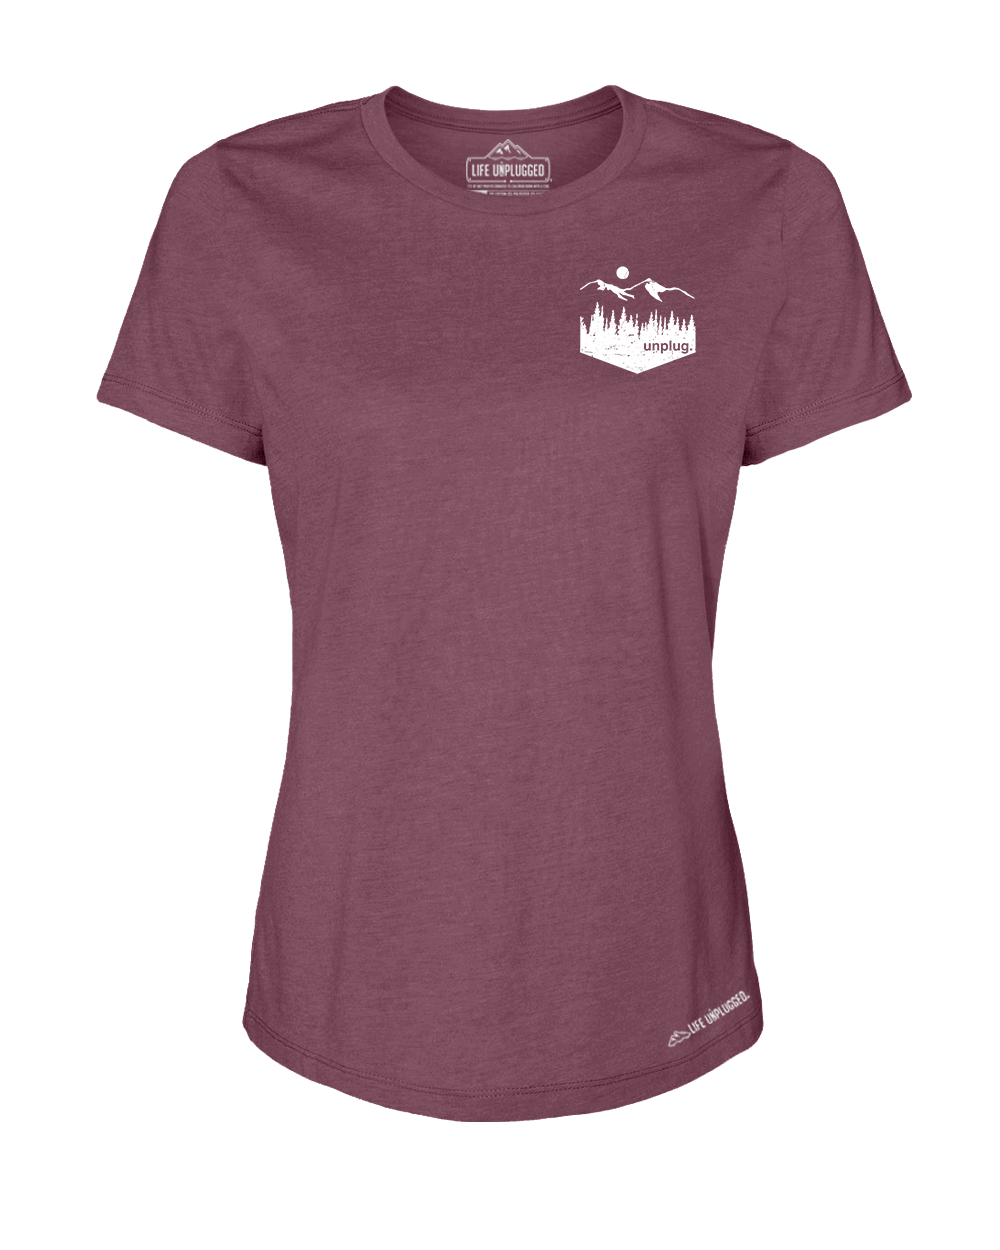 Unplug Mountain Left Chest Pocket Premium Women's Relaxed Fit Polyblend T-Shirt